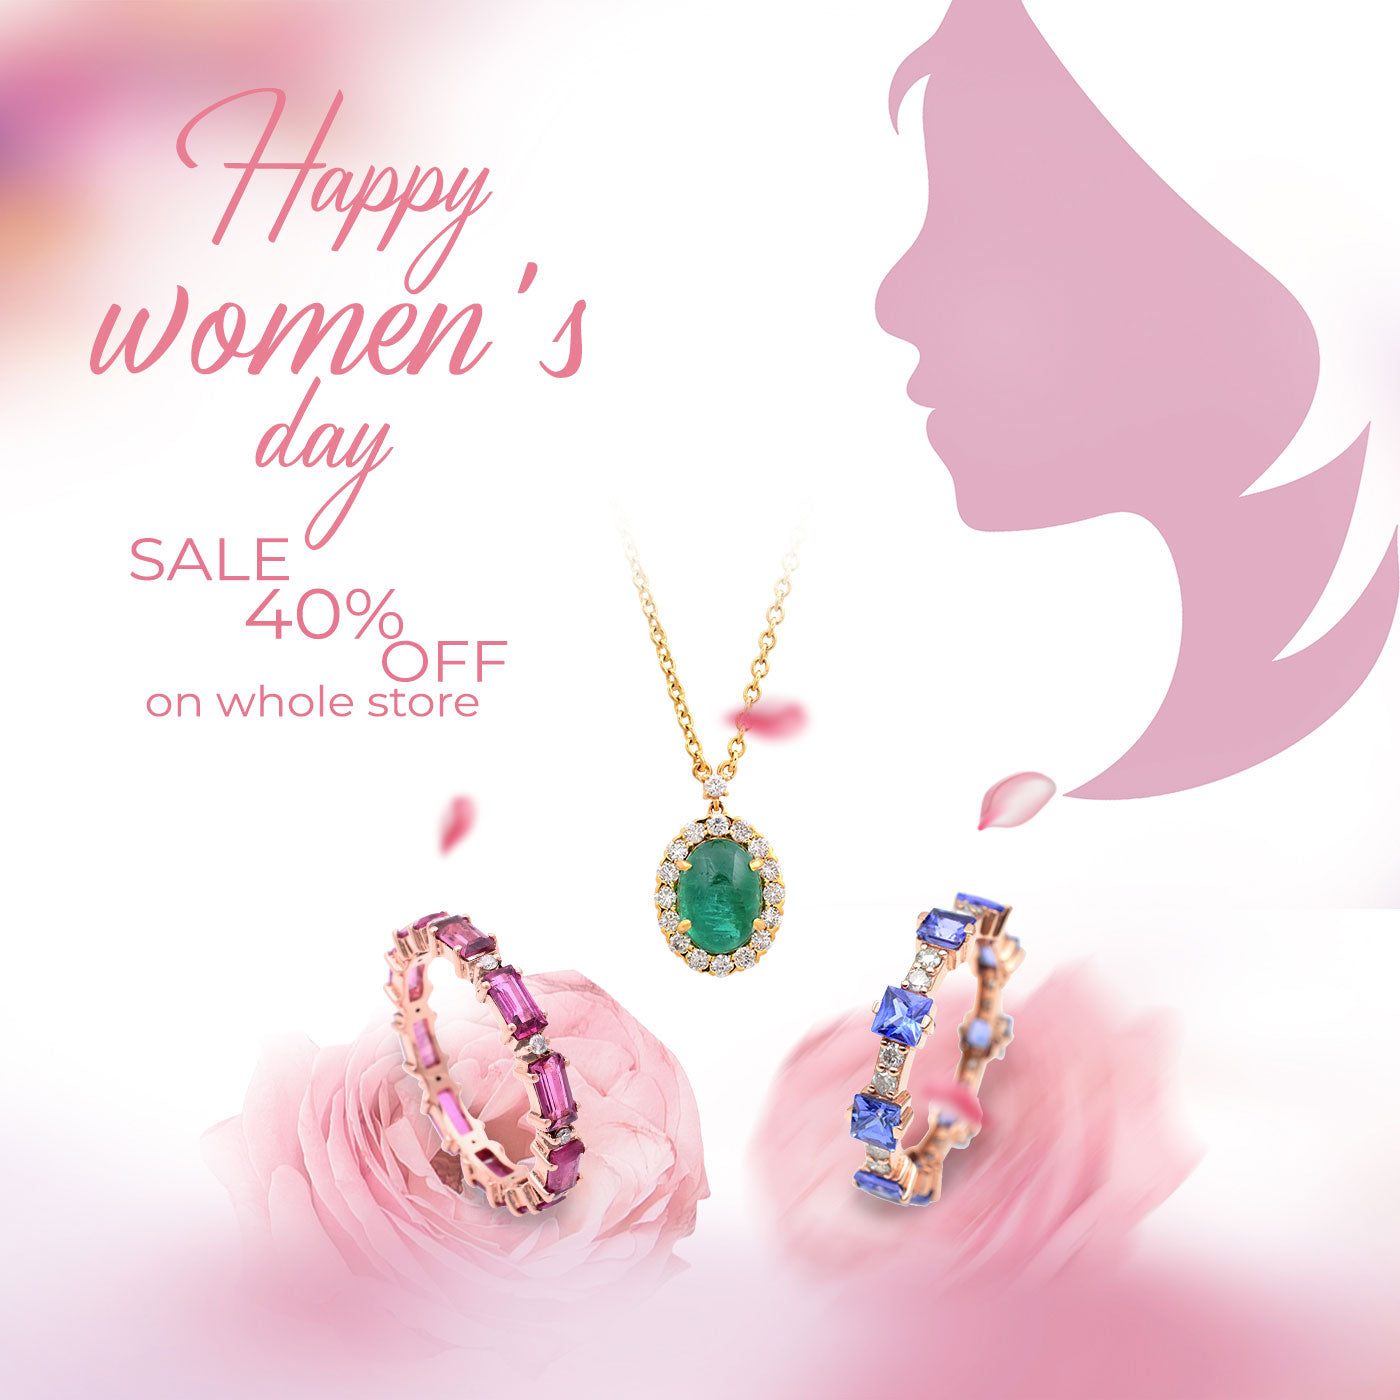 Women's Day Sale 40% Off